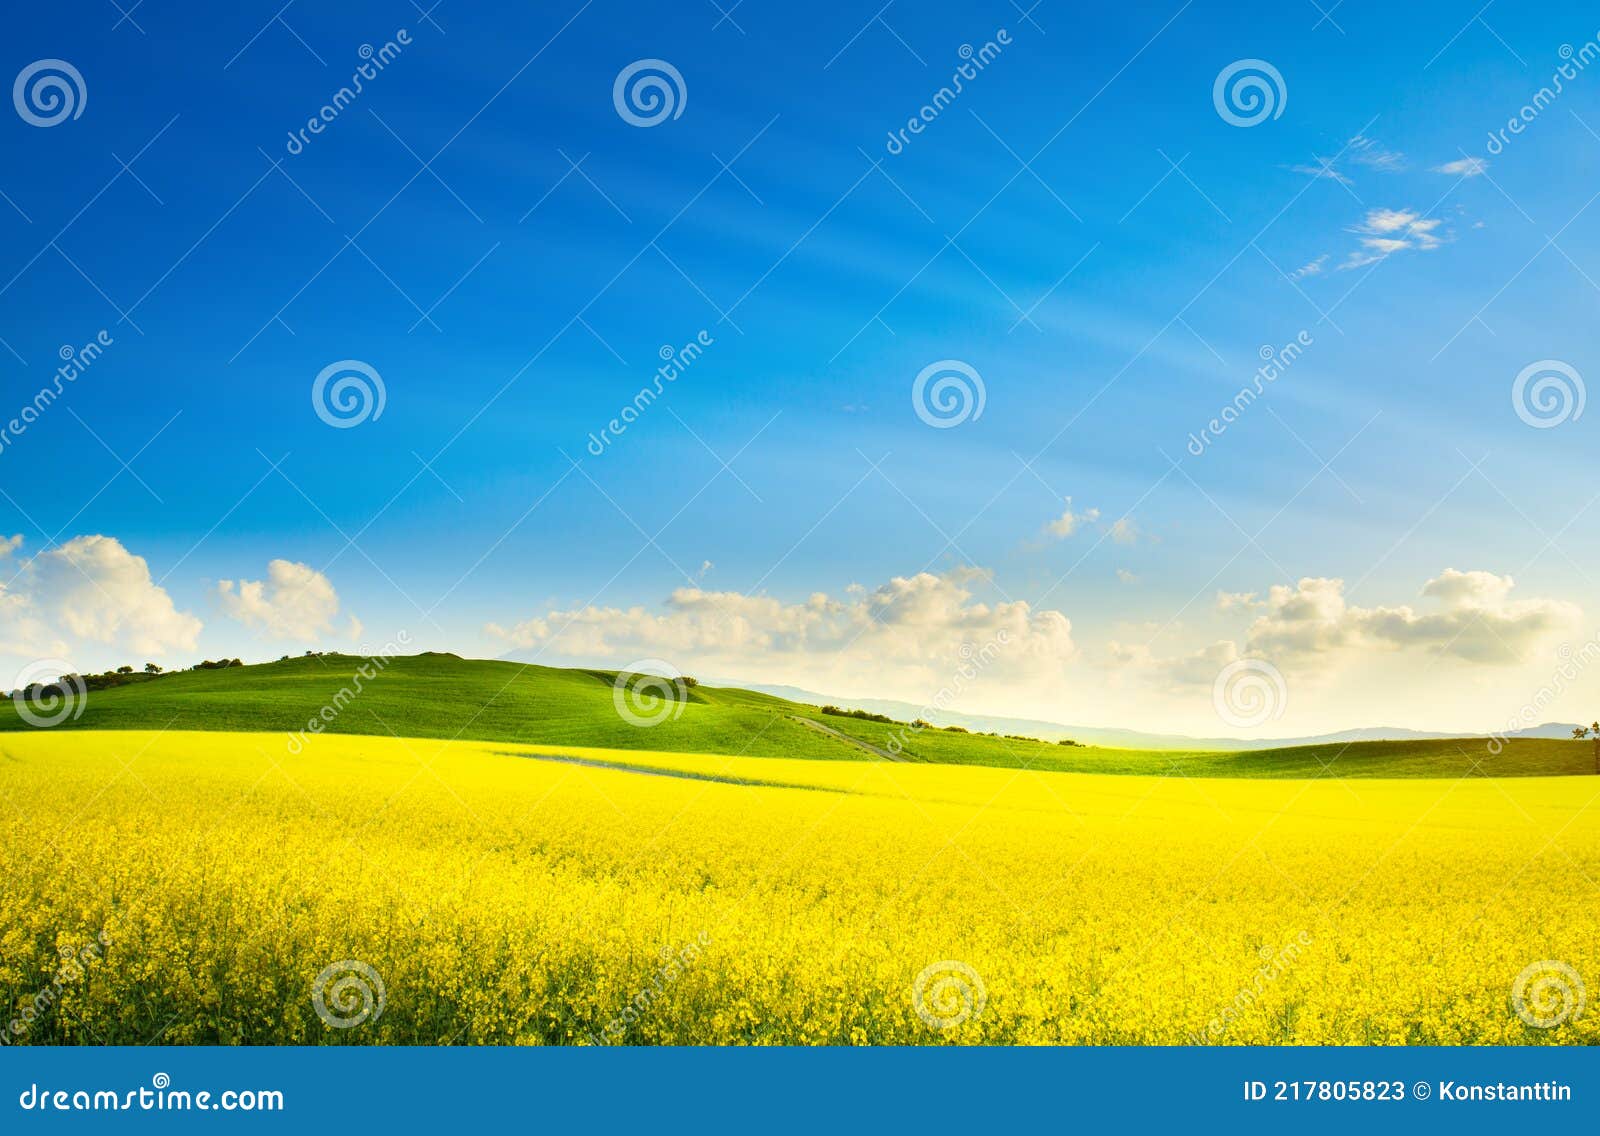 art springtime rural landscape. rape spring field and blue sky horizon